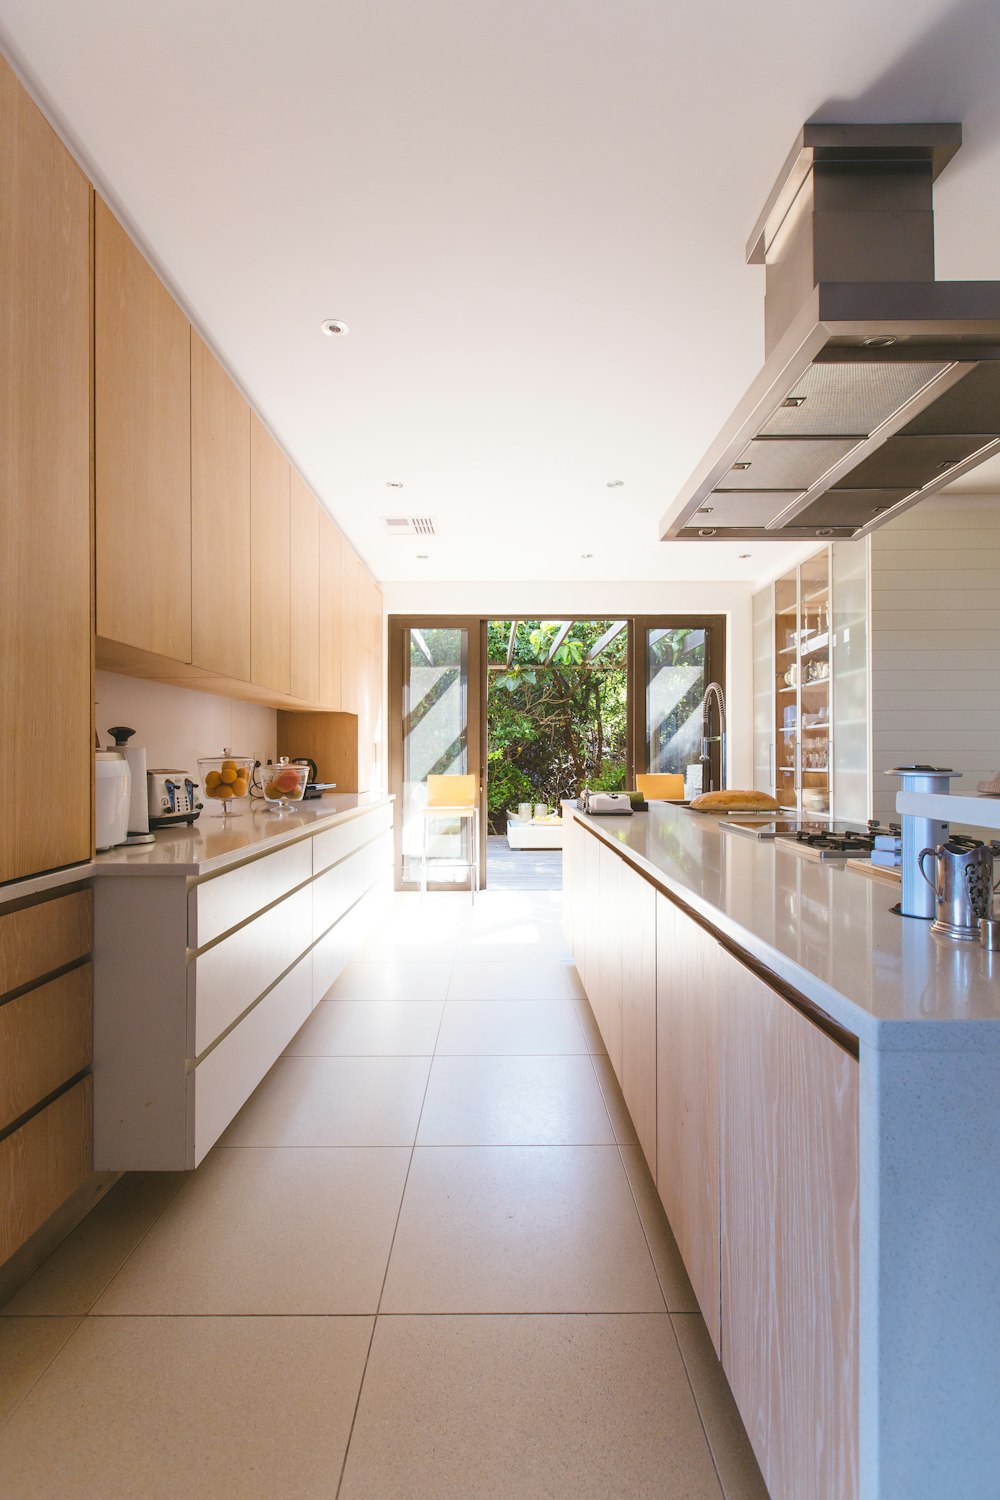 500+ kitchen design pictures | download free images on unsplash